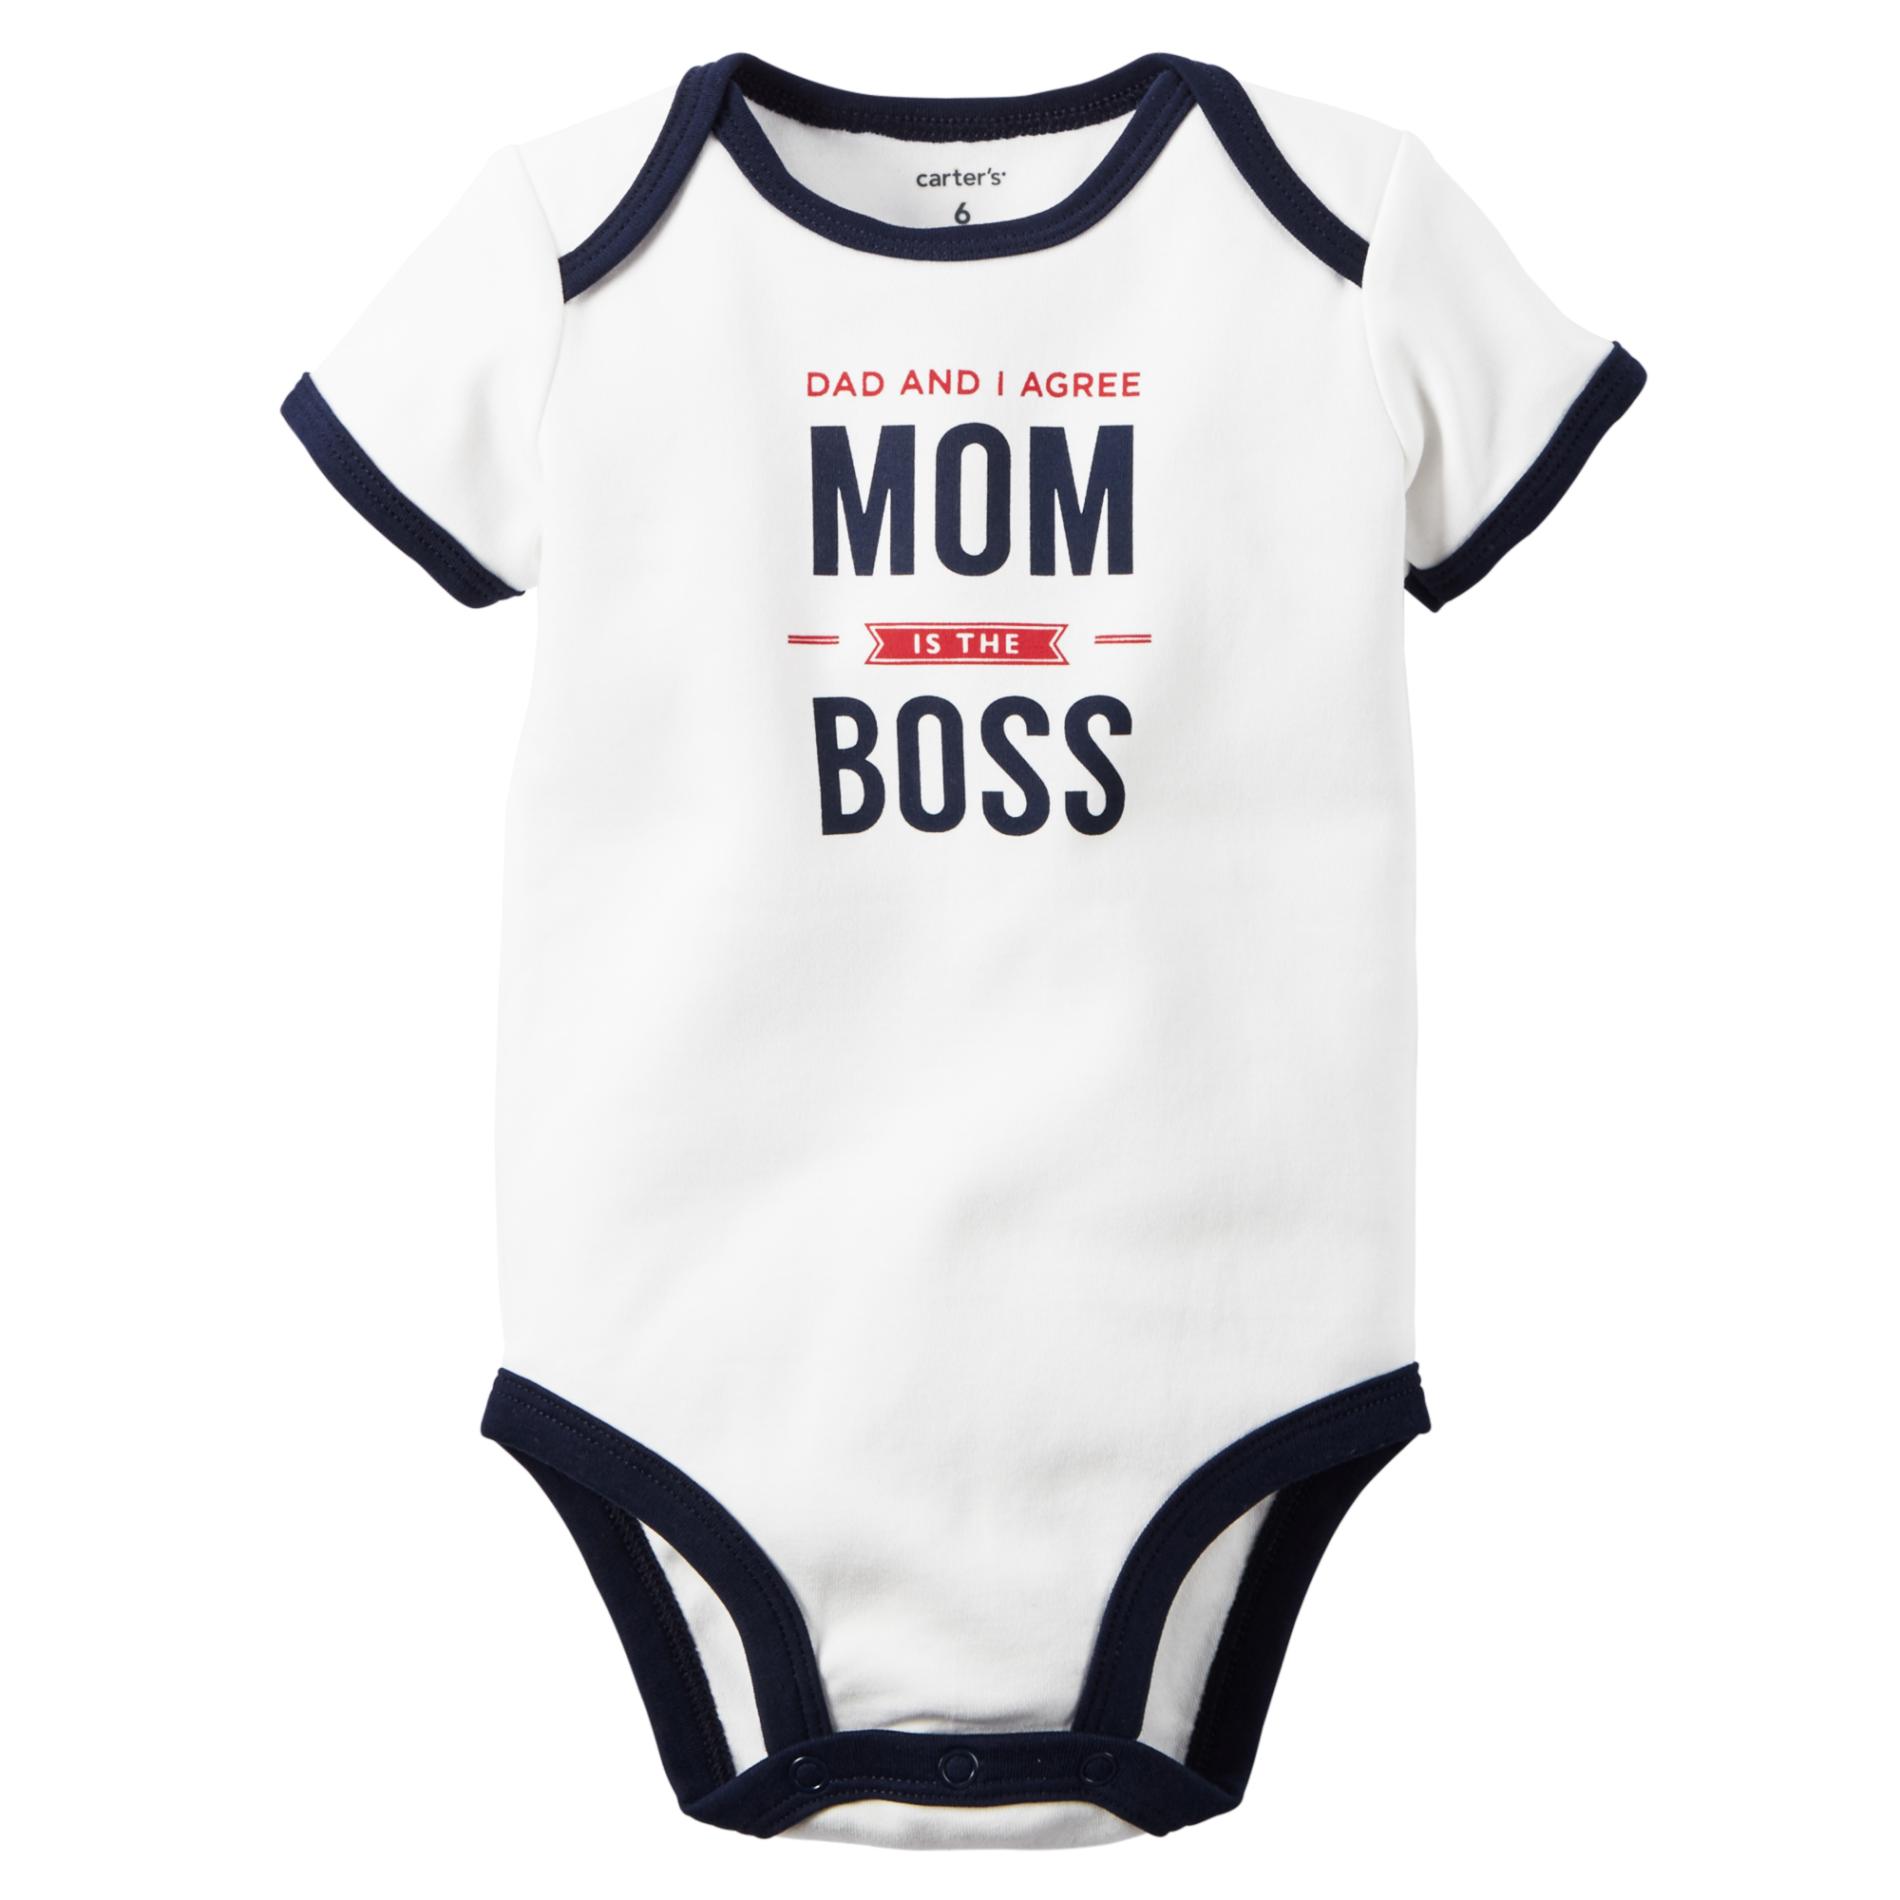 Carter's Newborn & Infant Boy's Graphic Bodysuit - Mom